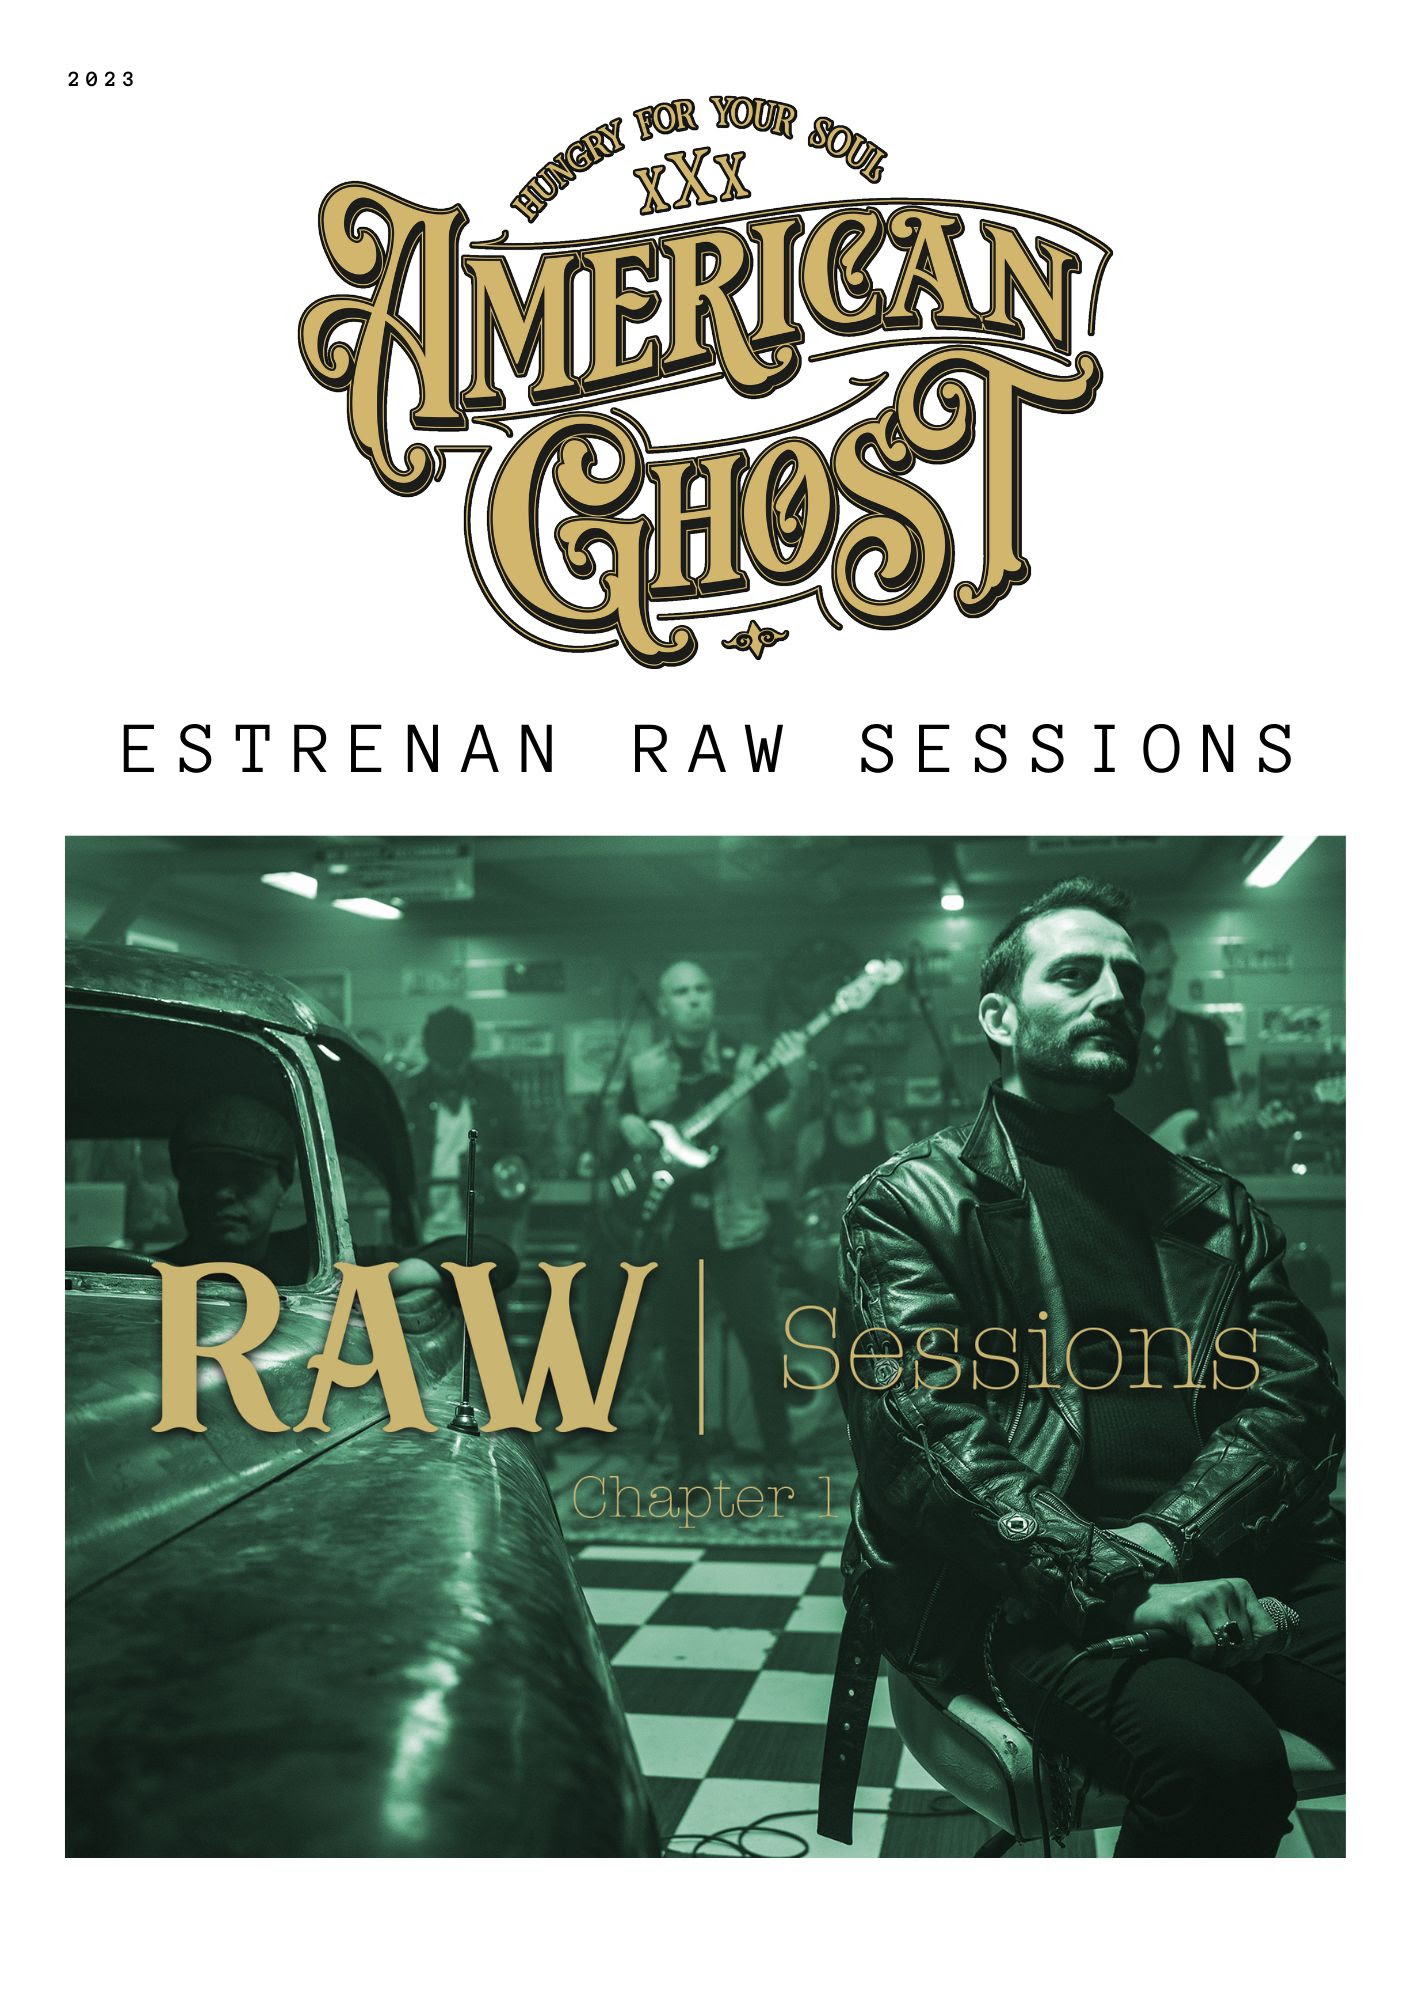 American Ghost estrenan Raw Sessions